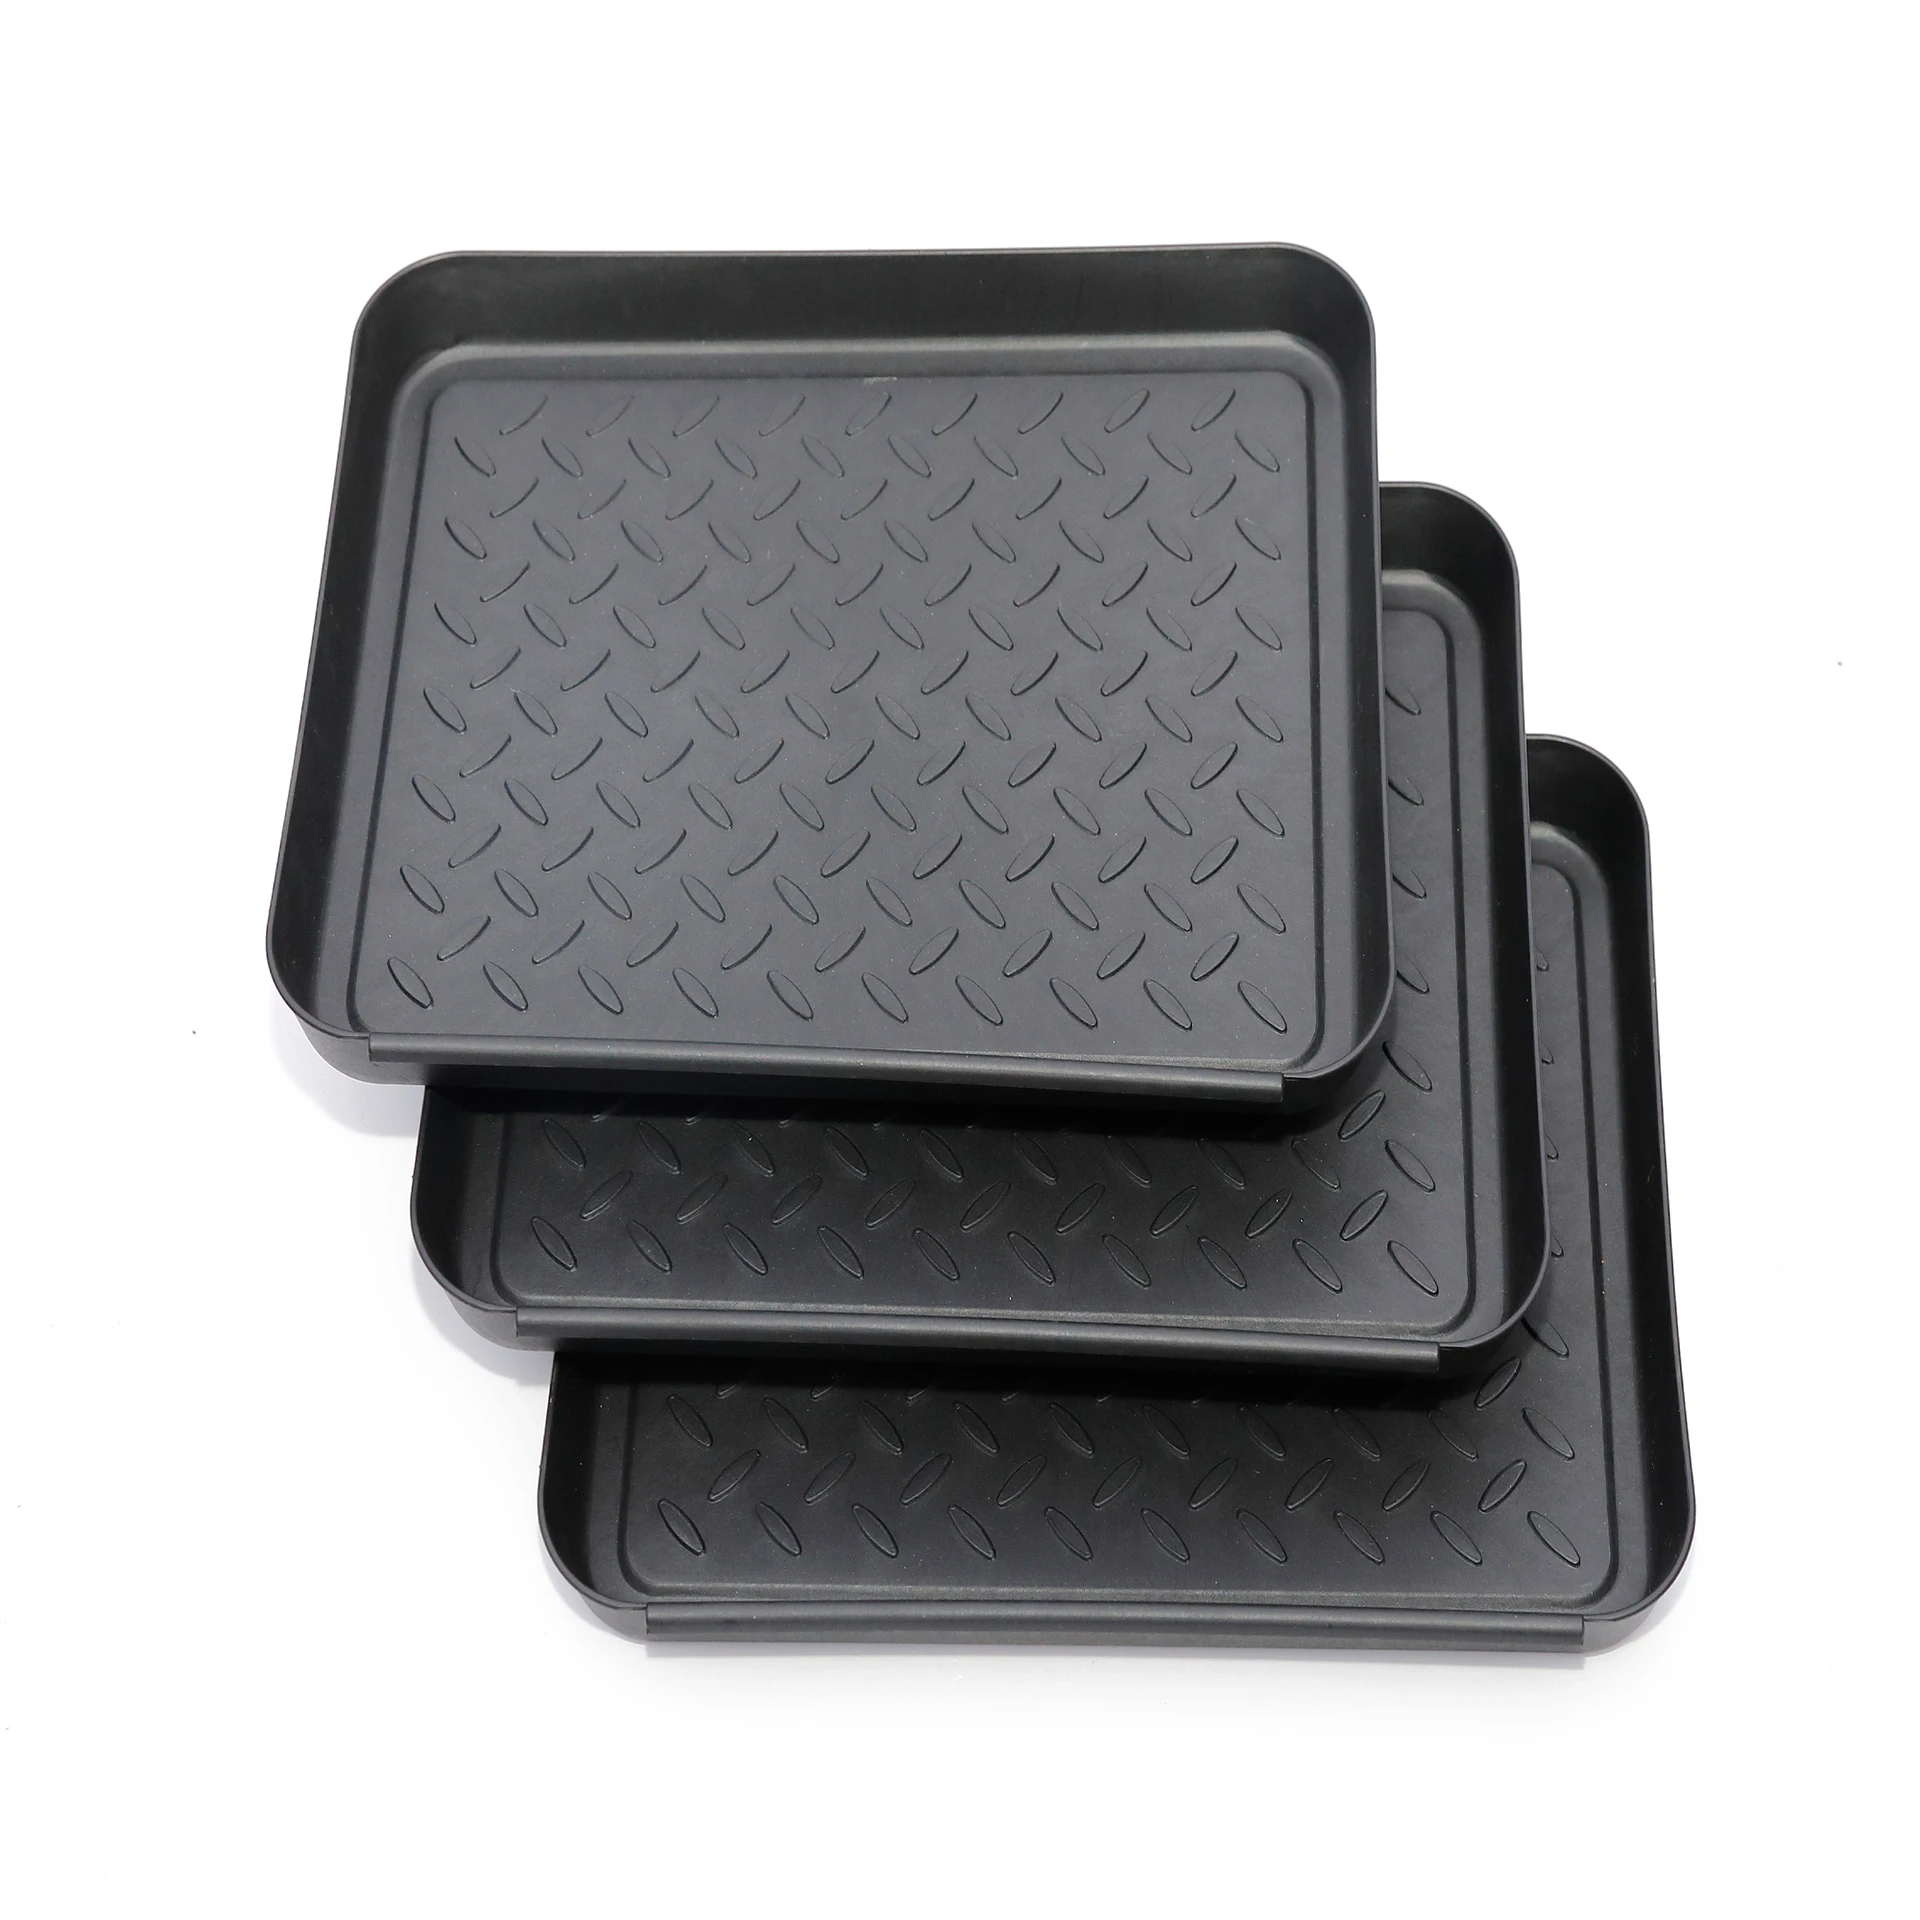 

3PCS set Amazon hot sale Competitive Price Multi-purpose Utility black Storage pet food garden plant boot plastic shoe tray